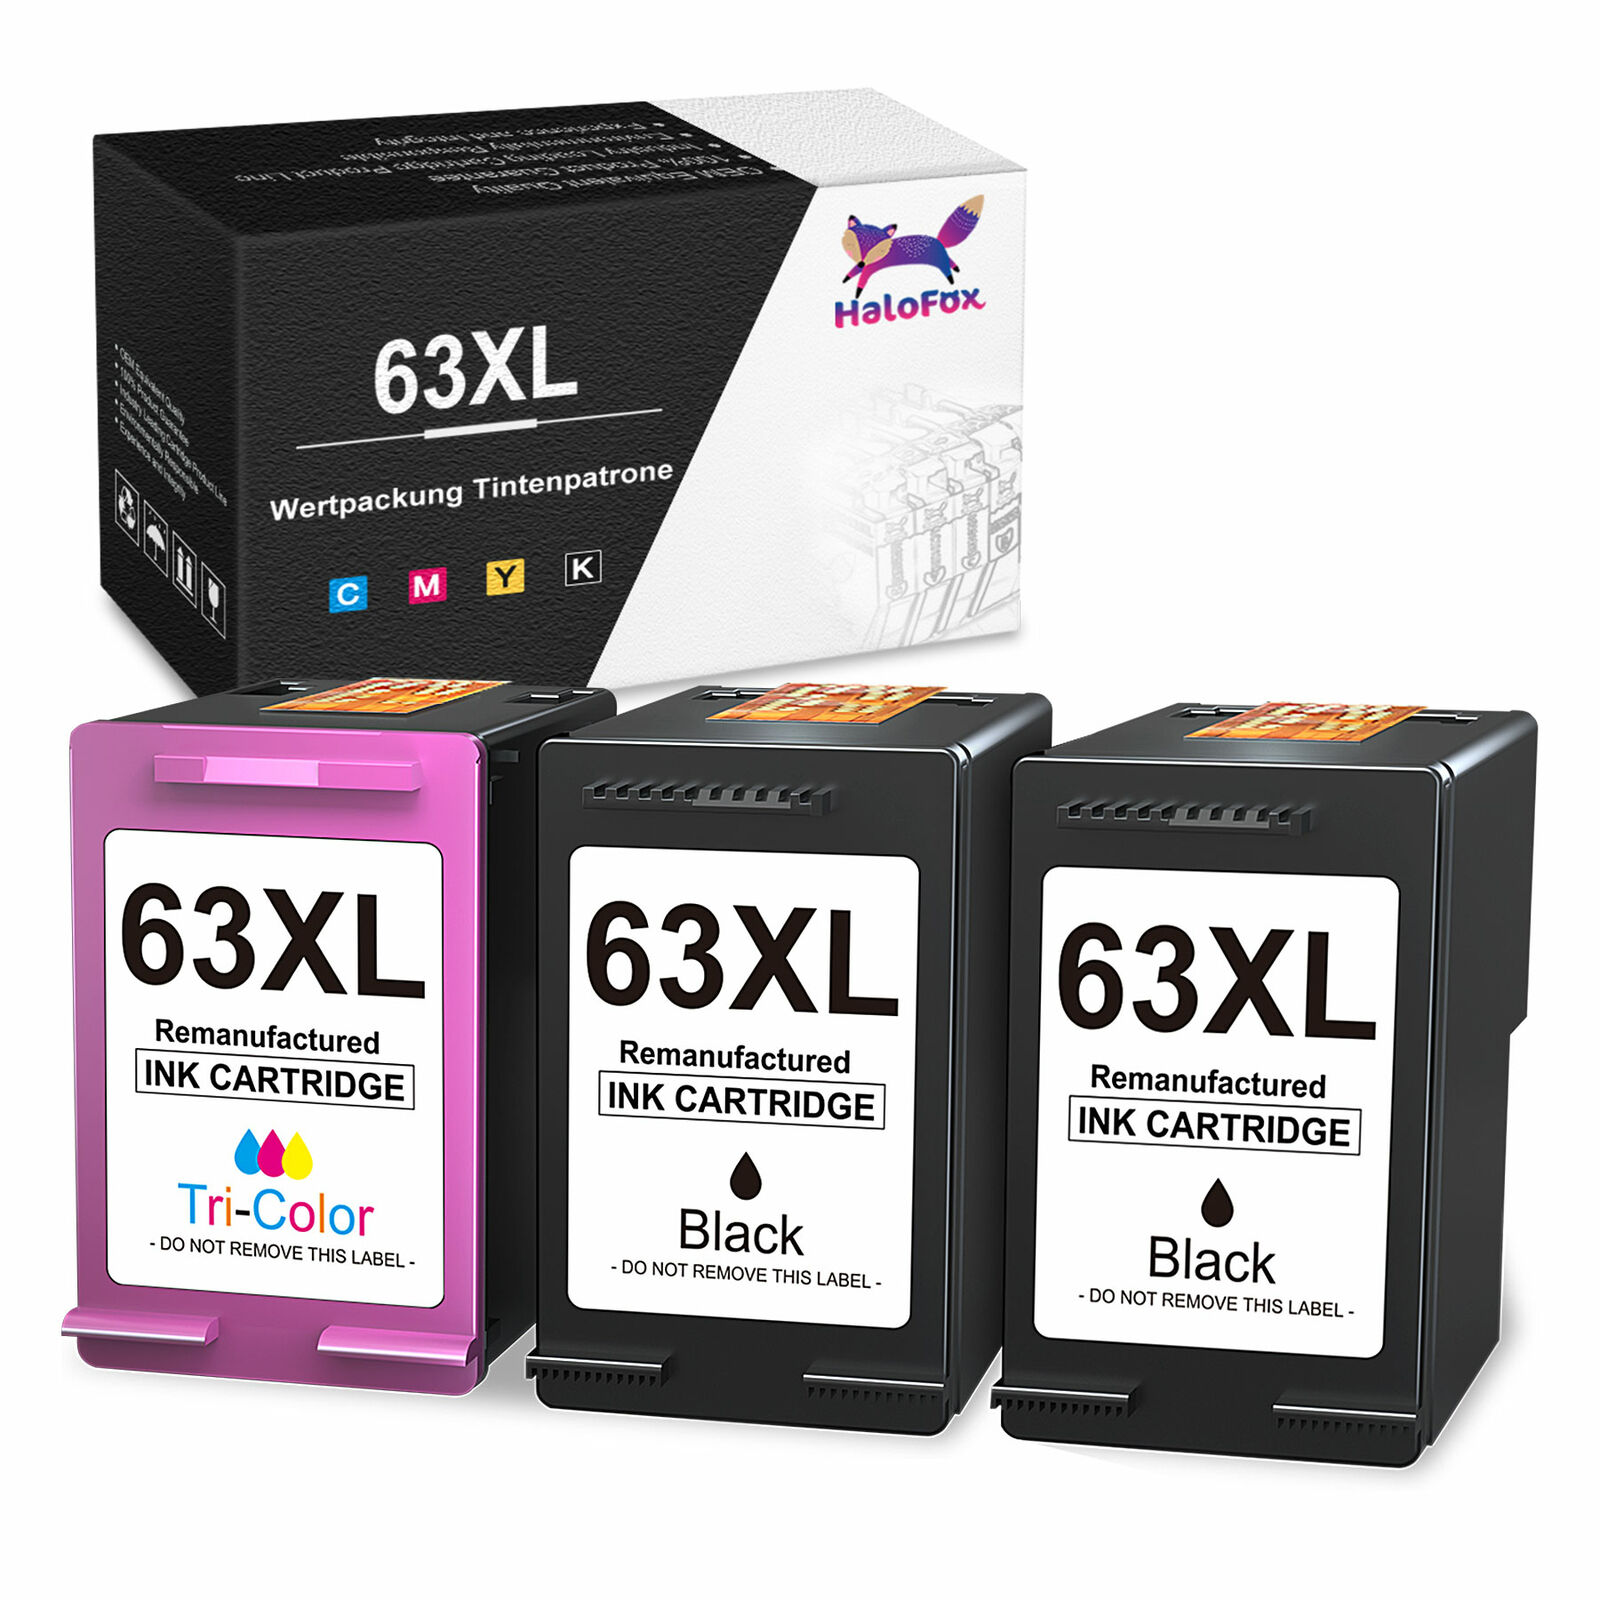 3x 63XL Ink Cartridges for HP Deskjet 1110 1112 2130 2132 3630 3632 3634 3636